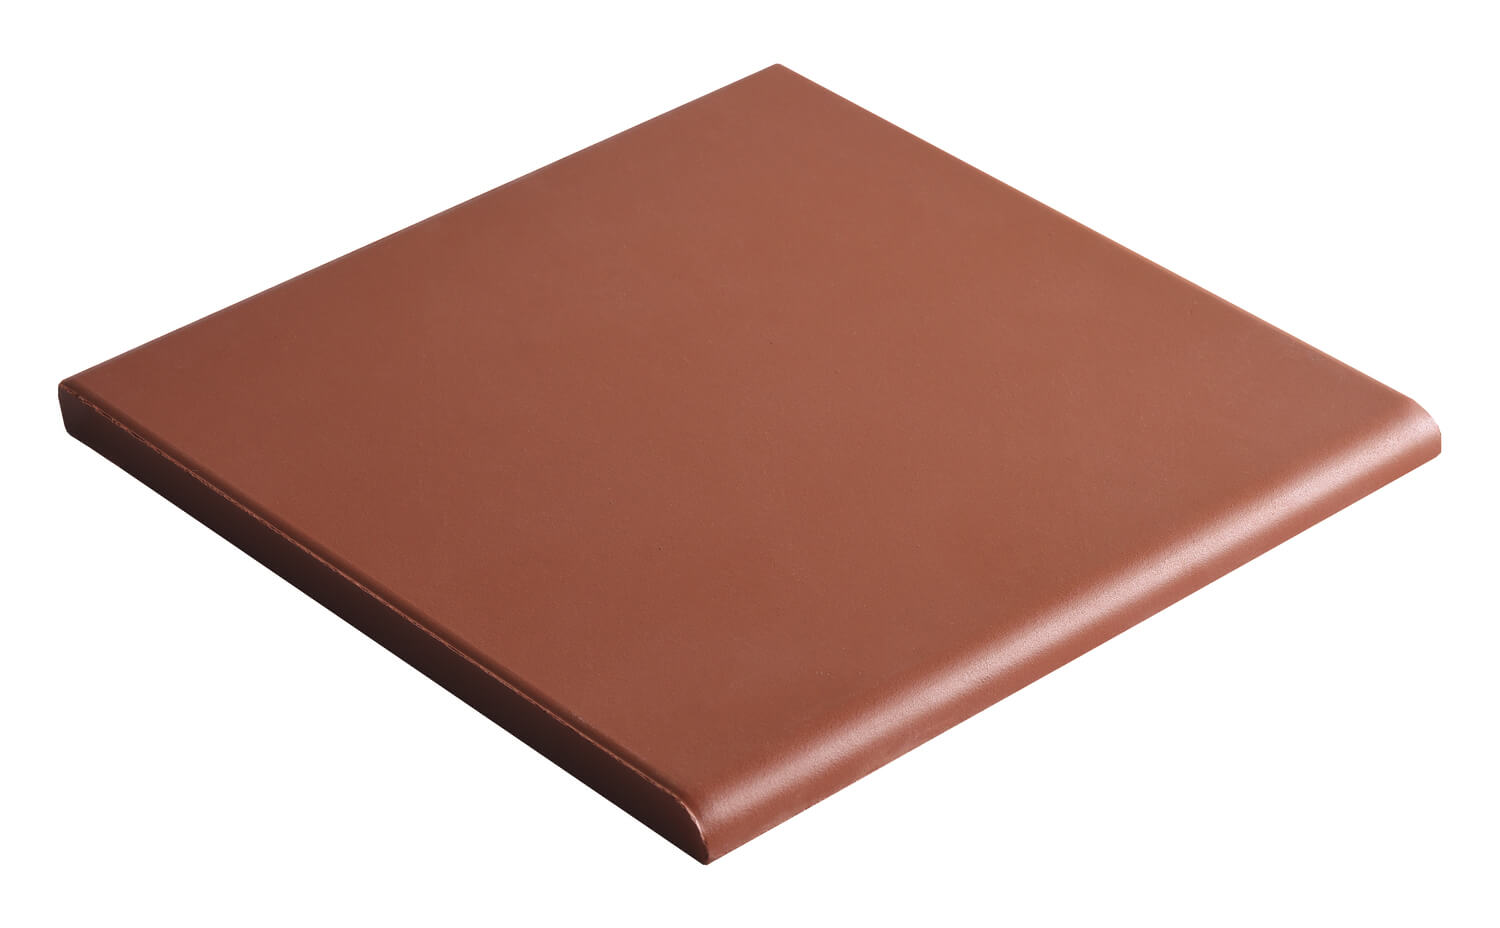 Dorset Woolliscroft Red Round Edge Slip Resistant Quarry Tile 148x148mm